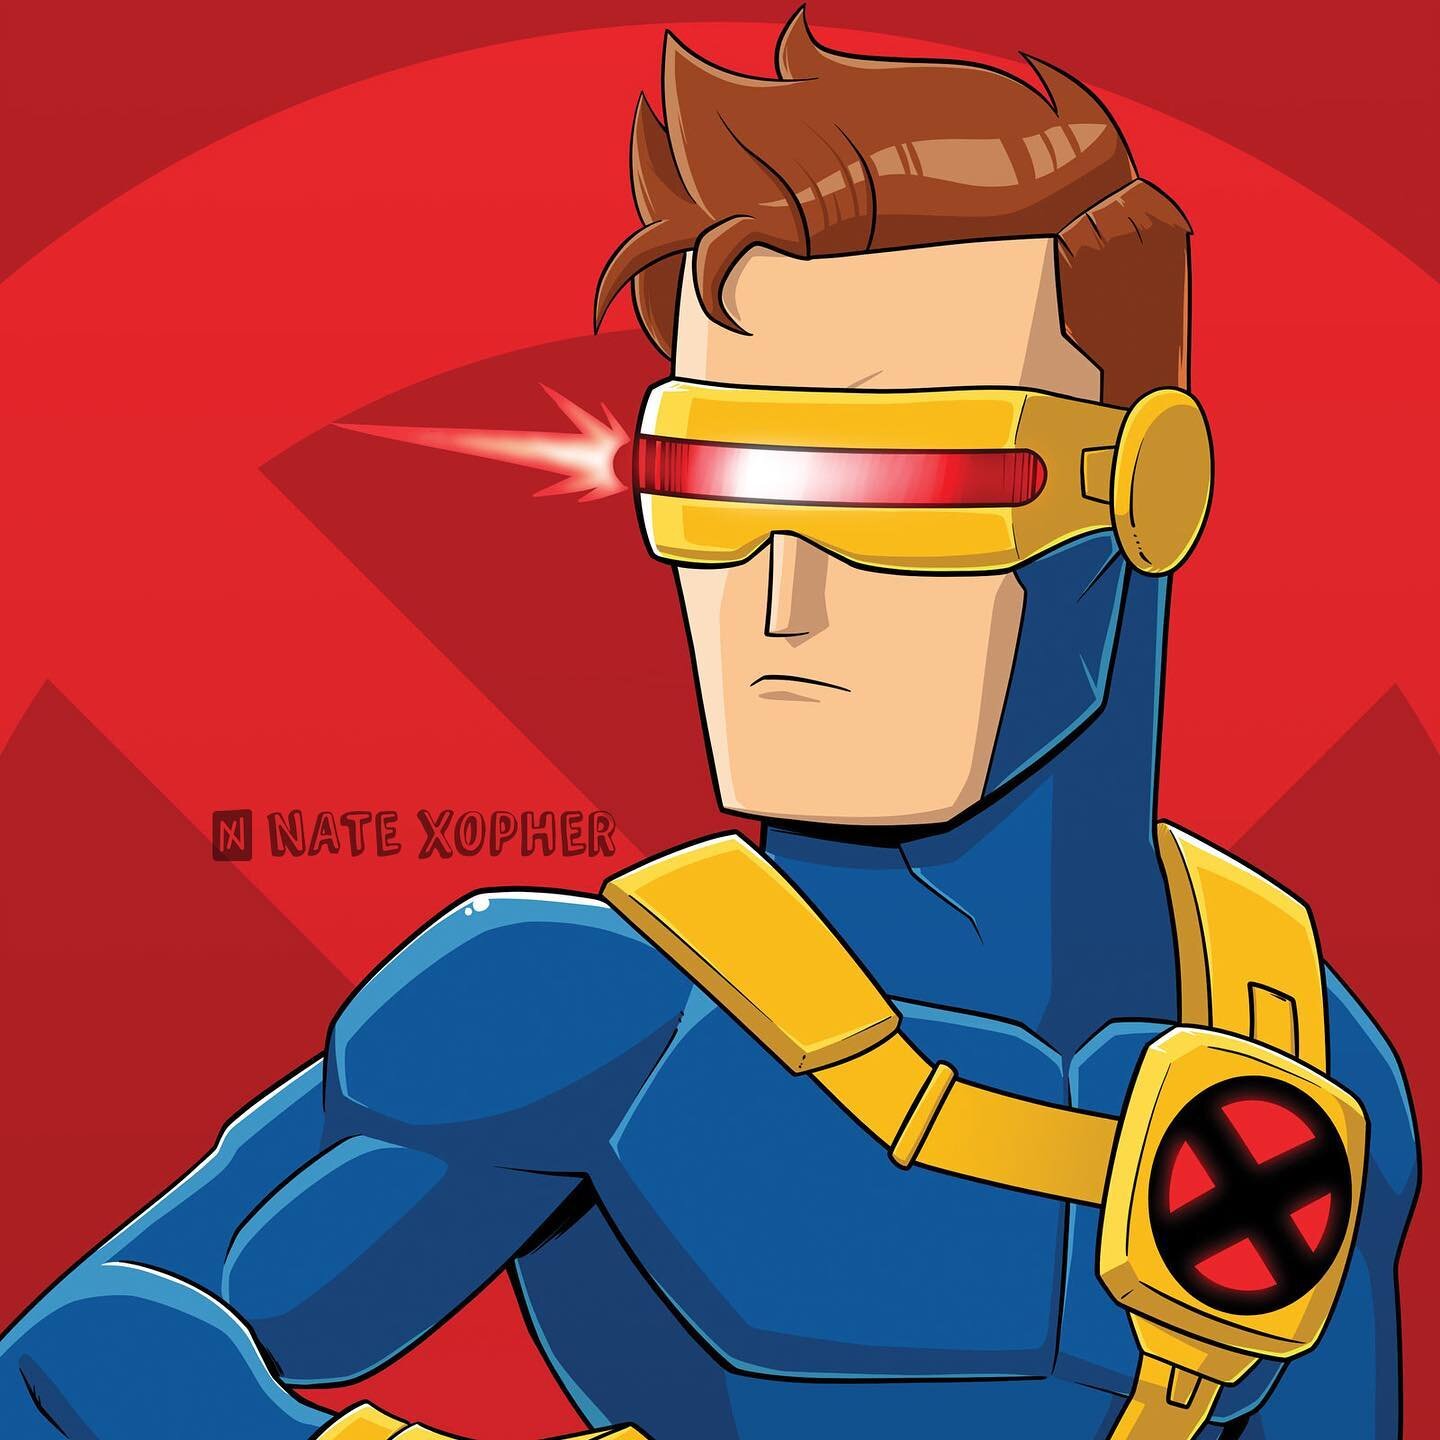 Every team needs a leader and Cyclops is the X-Man for the job #cyclops #xmen
.
#marvel #drawing #fanart #superhero #comic #cartoon #drawdrawdraw #xmenfanart